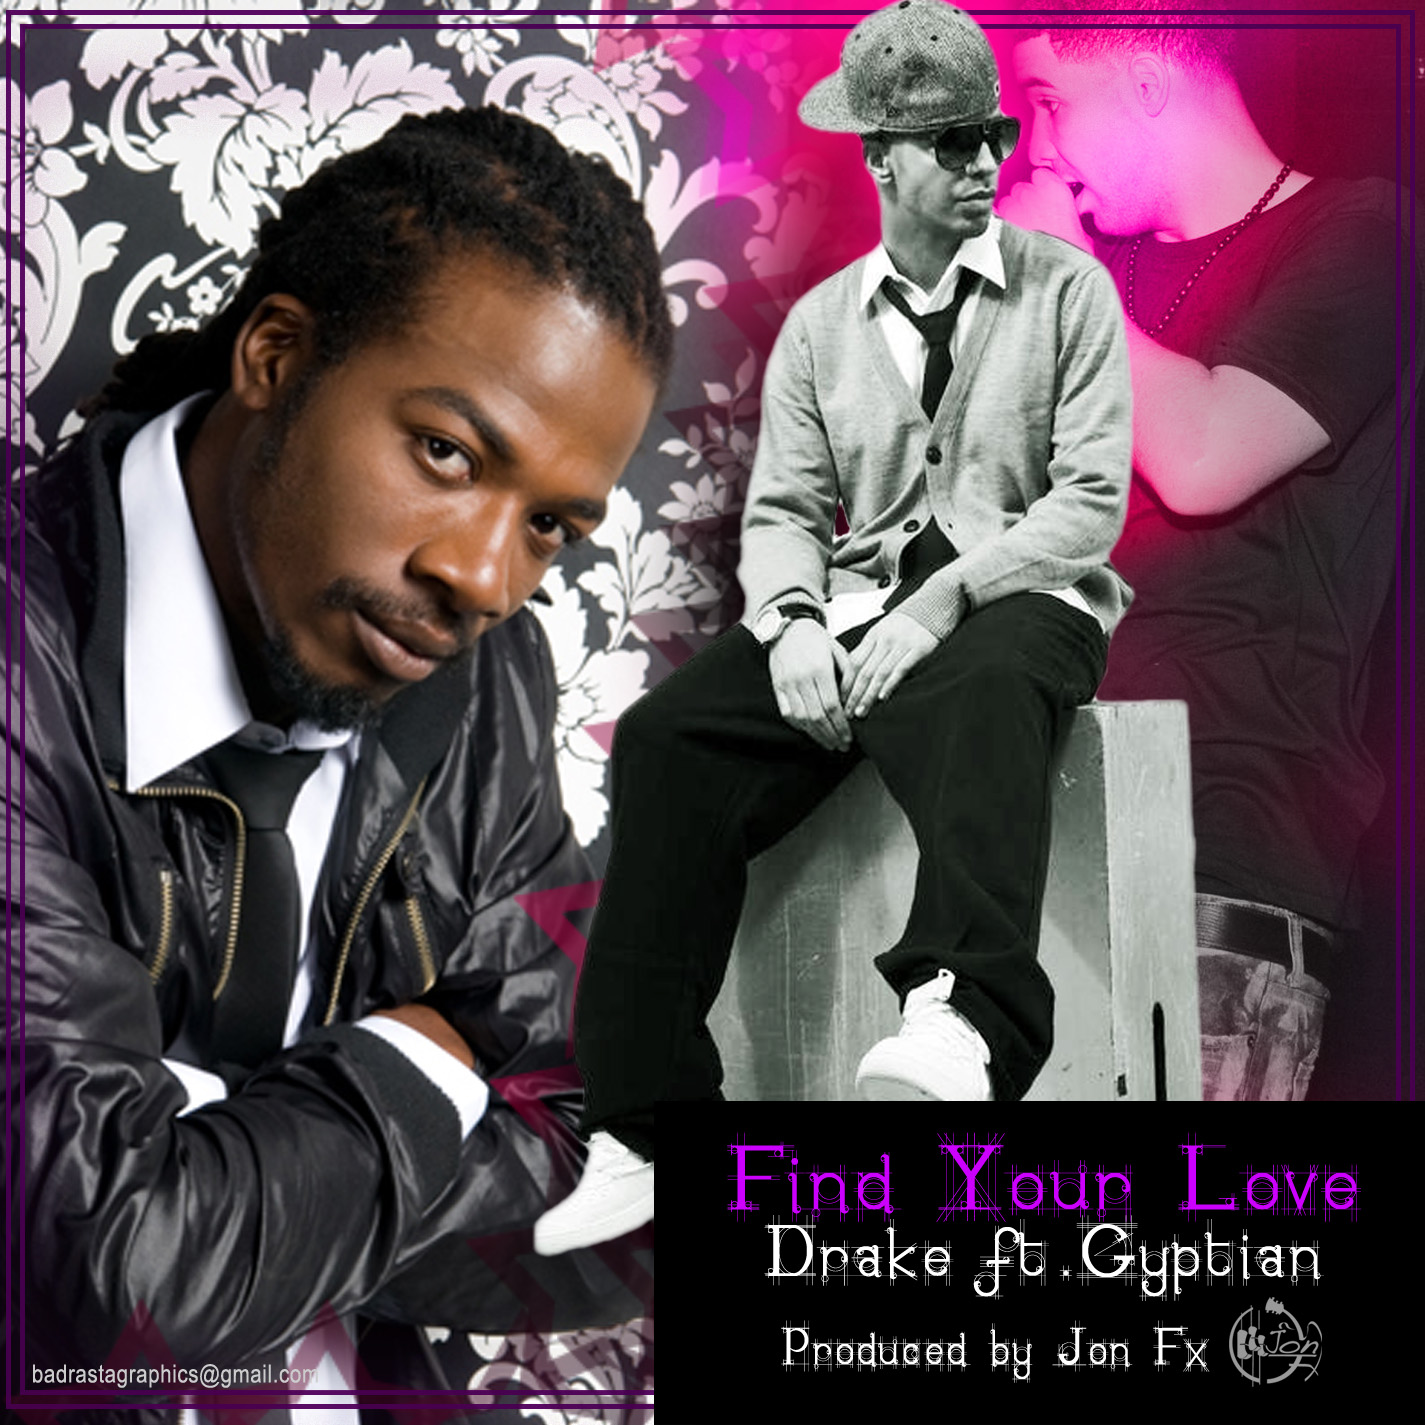 Drake + Gyptian - "Find Your Love (Reggae Remix)" (MP3)